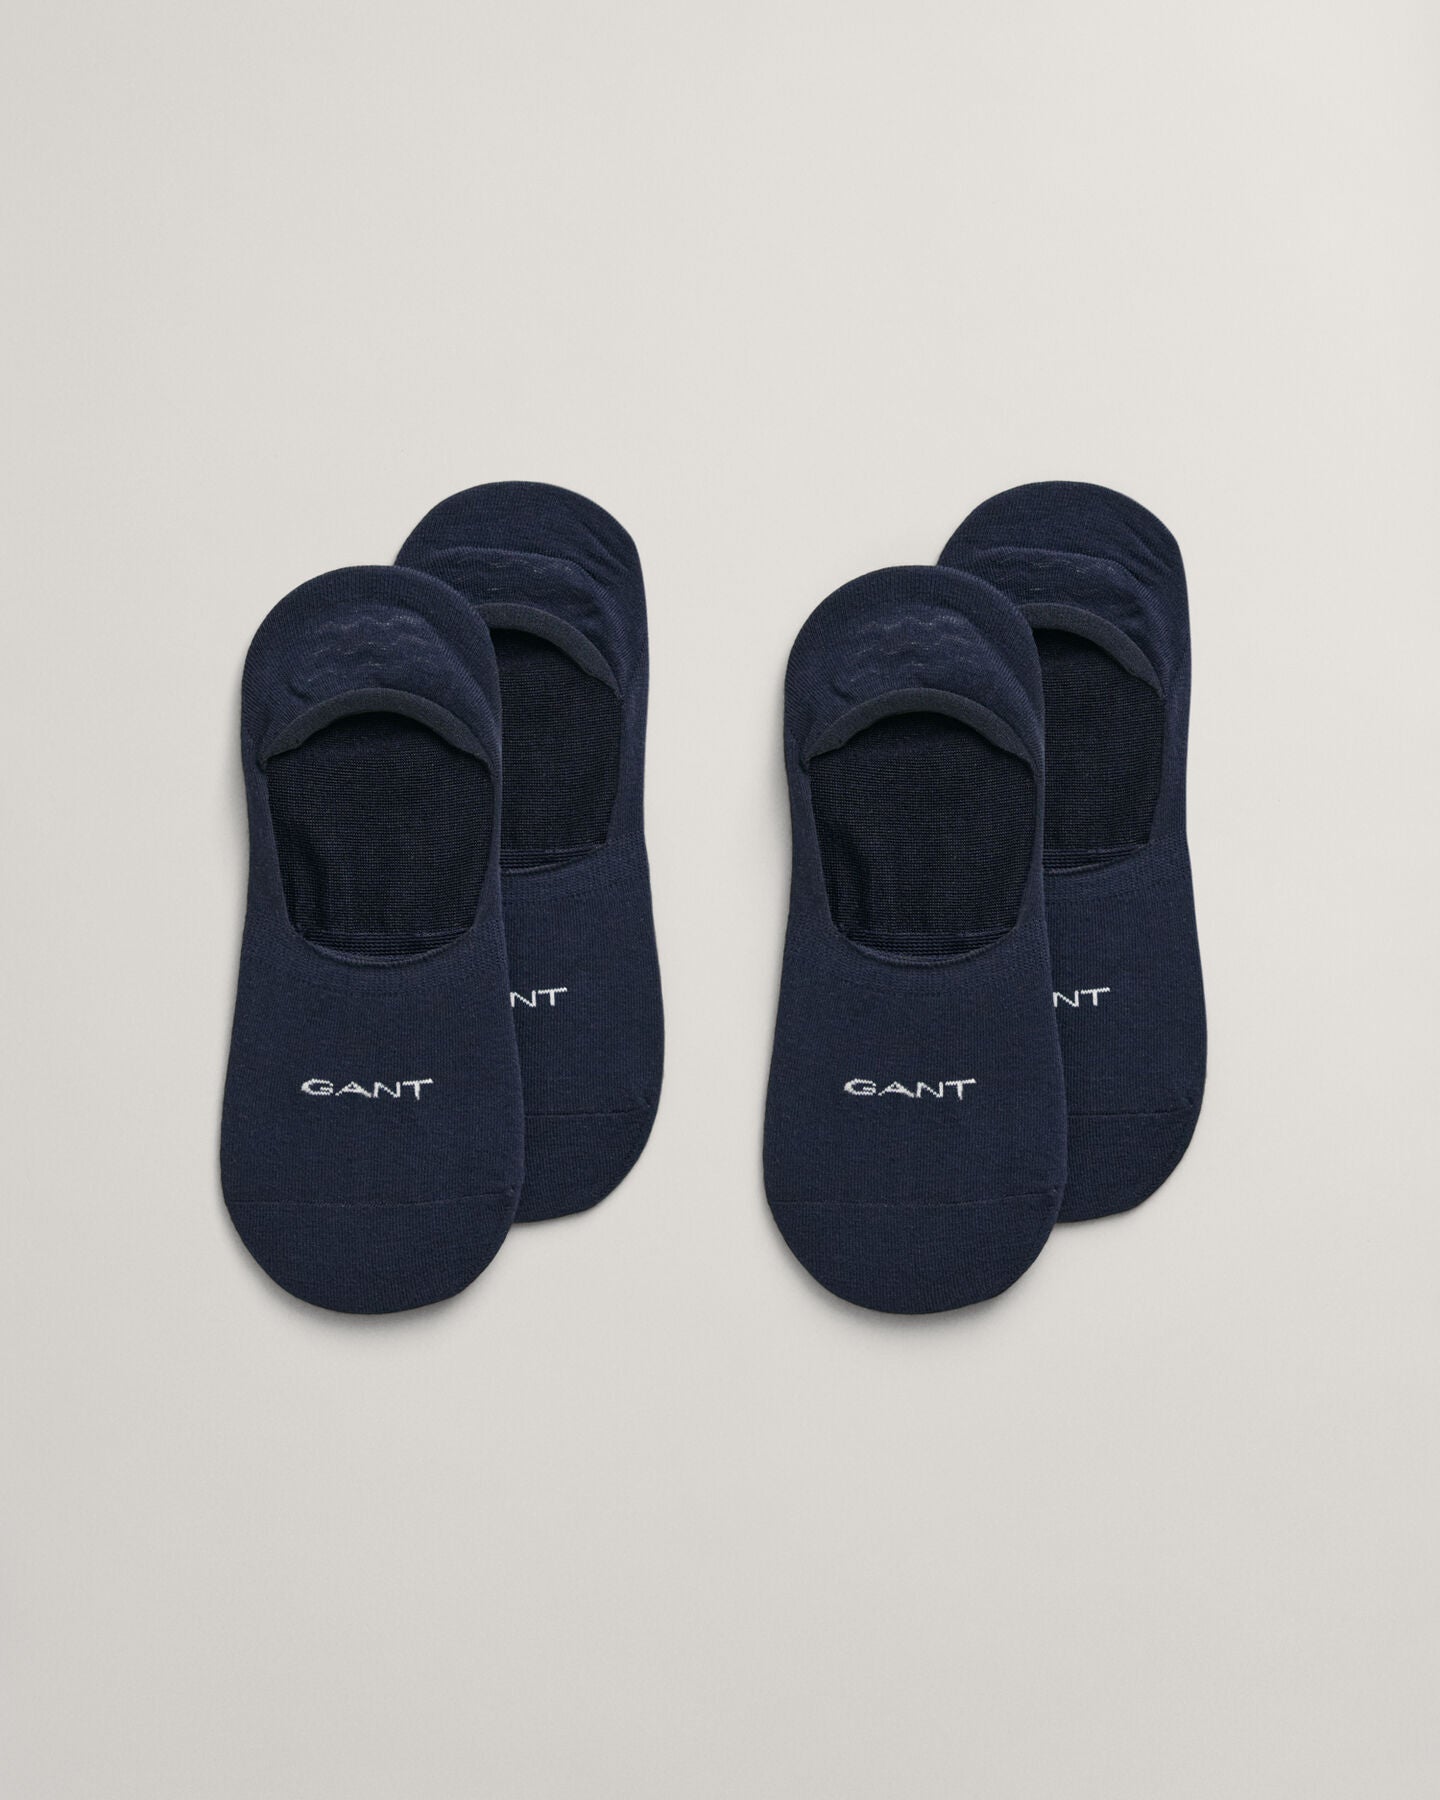 GANT - 2-Pack Invisible Socks in Marine Blue 9960257 410